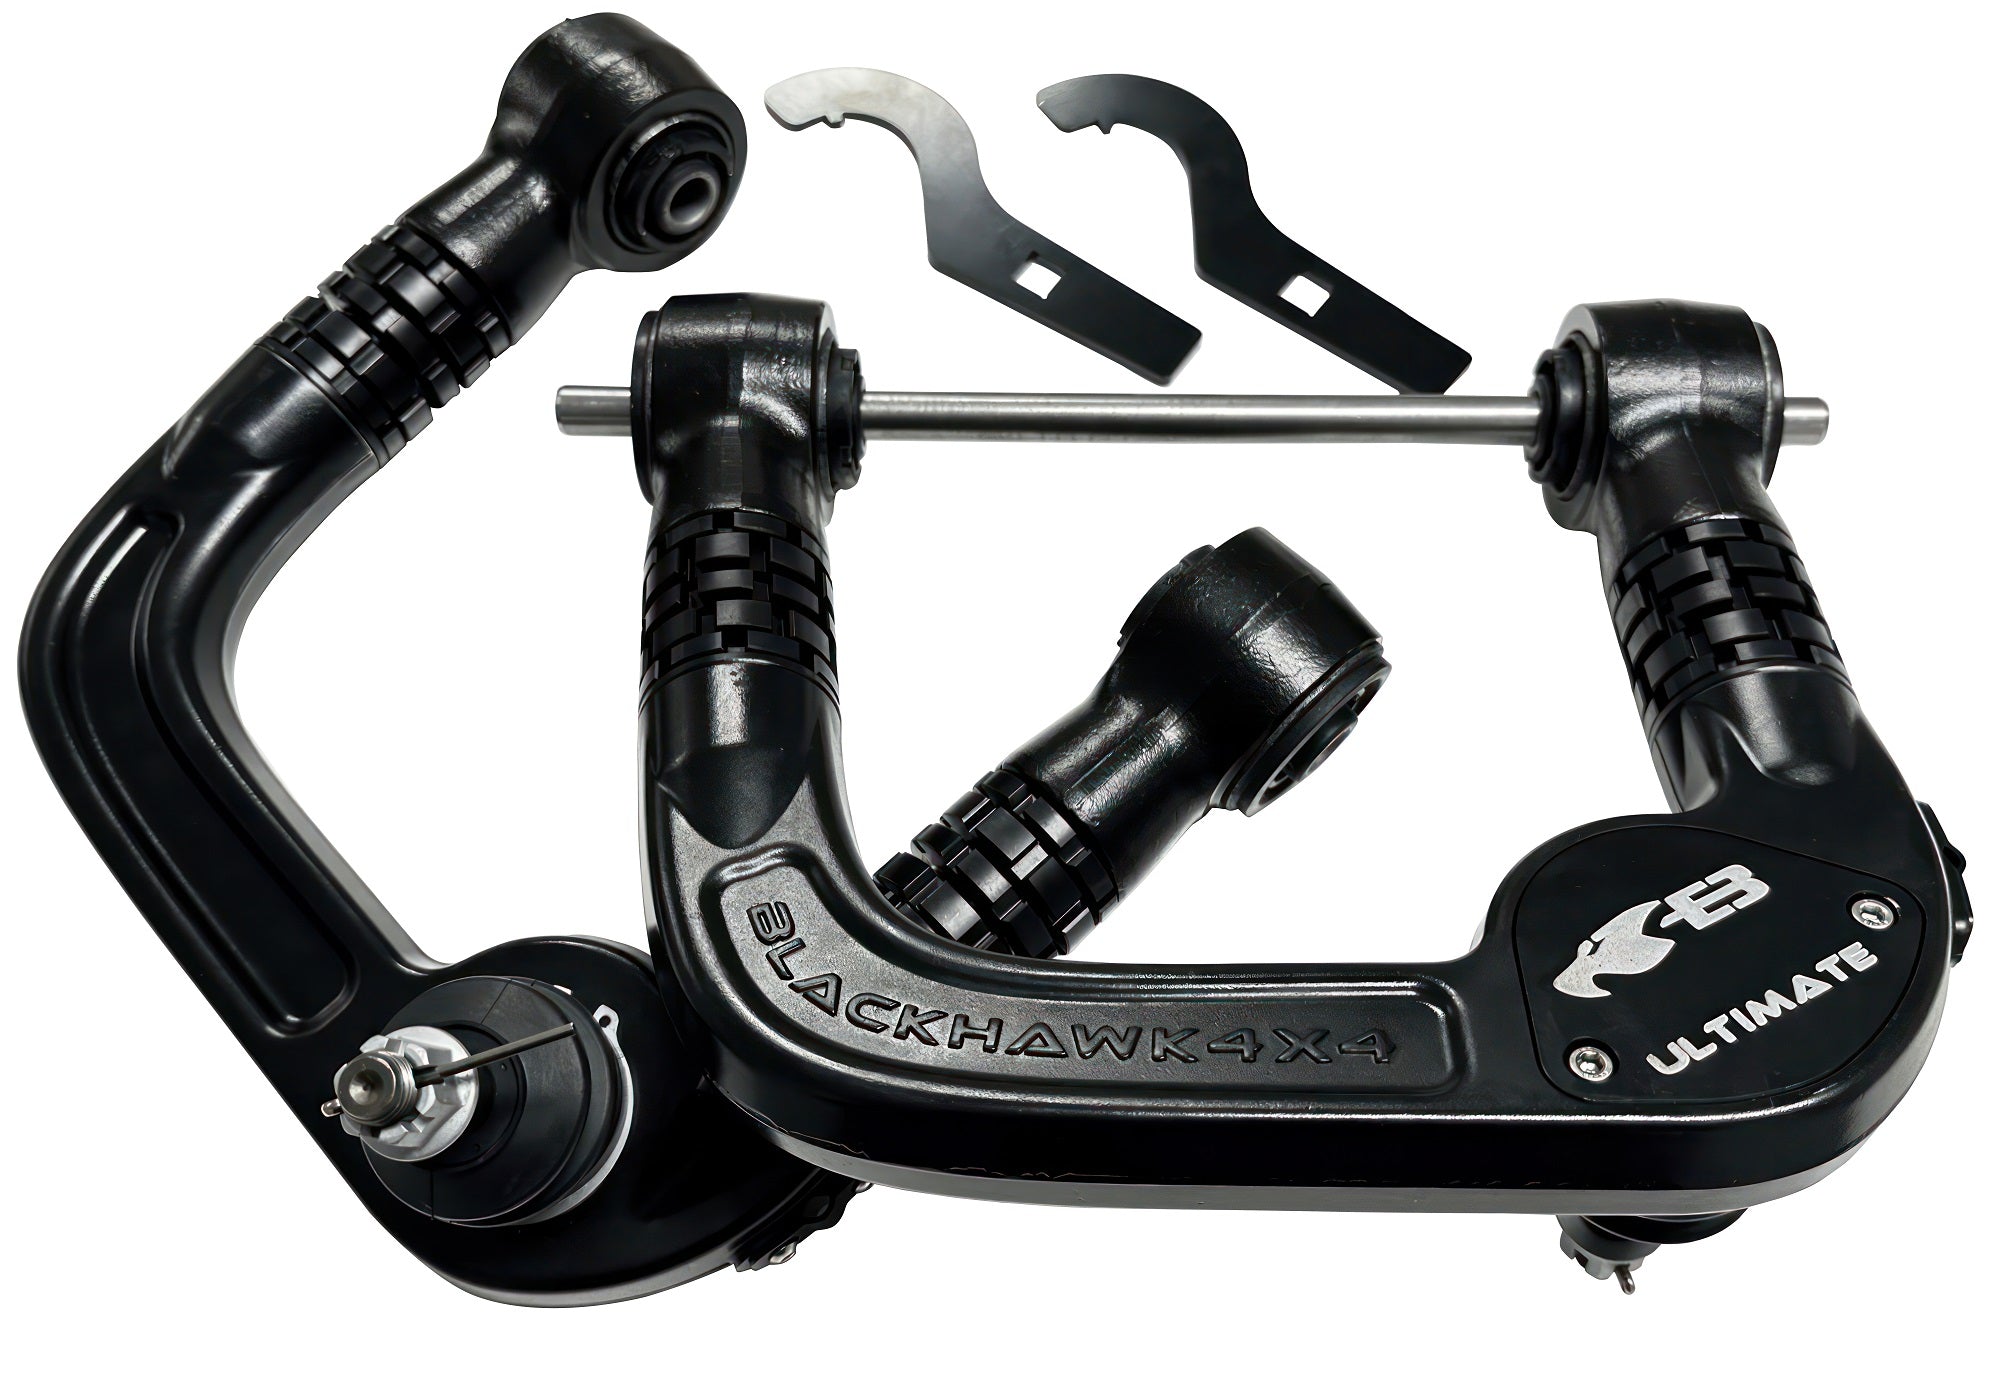 Blackhawk 4x4 ULTIMATE Adjustable Upper Control Arms for Toyota Landcruiser 200 Series